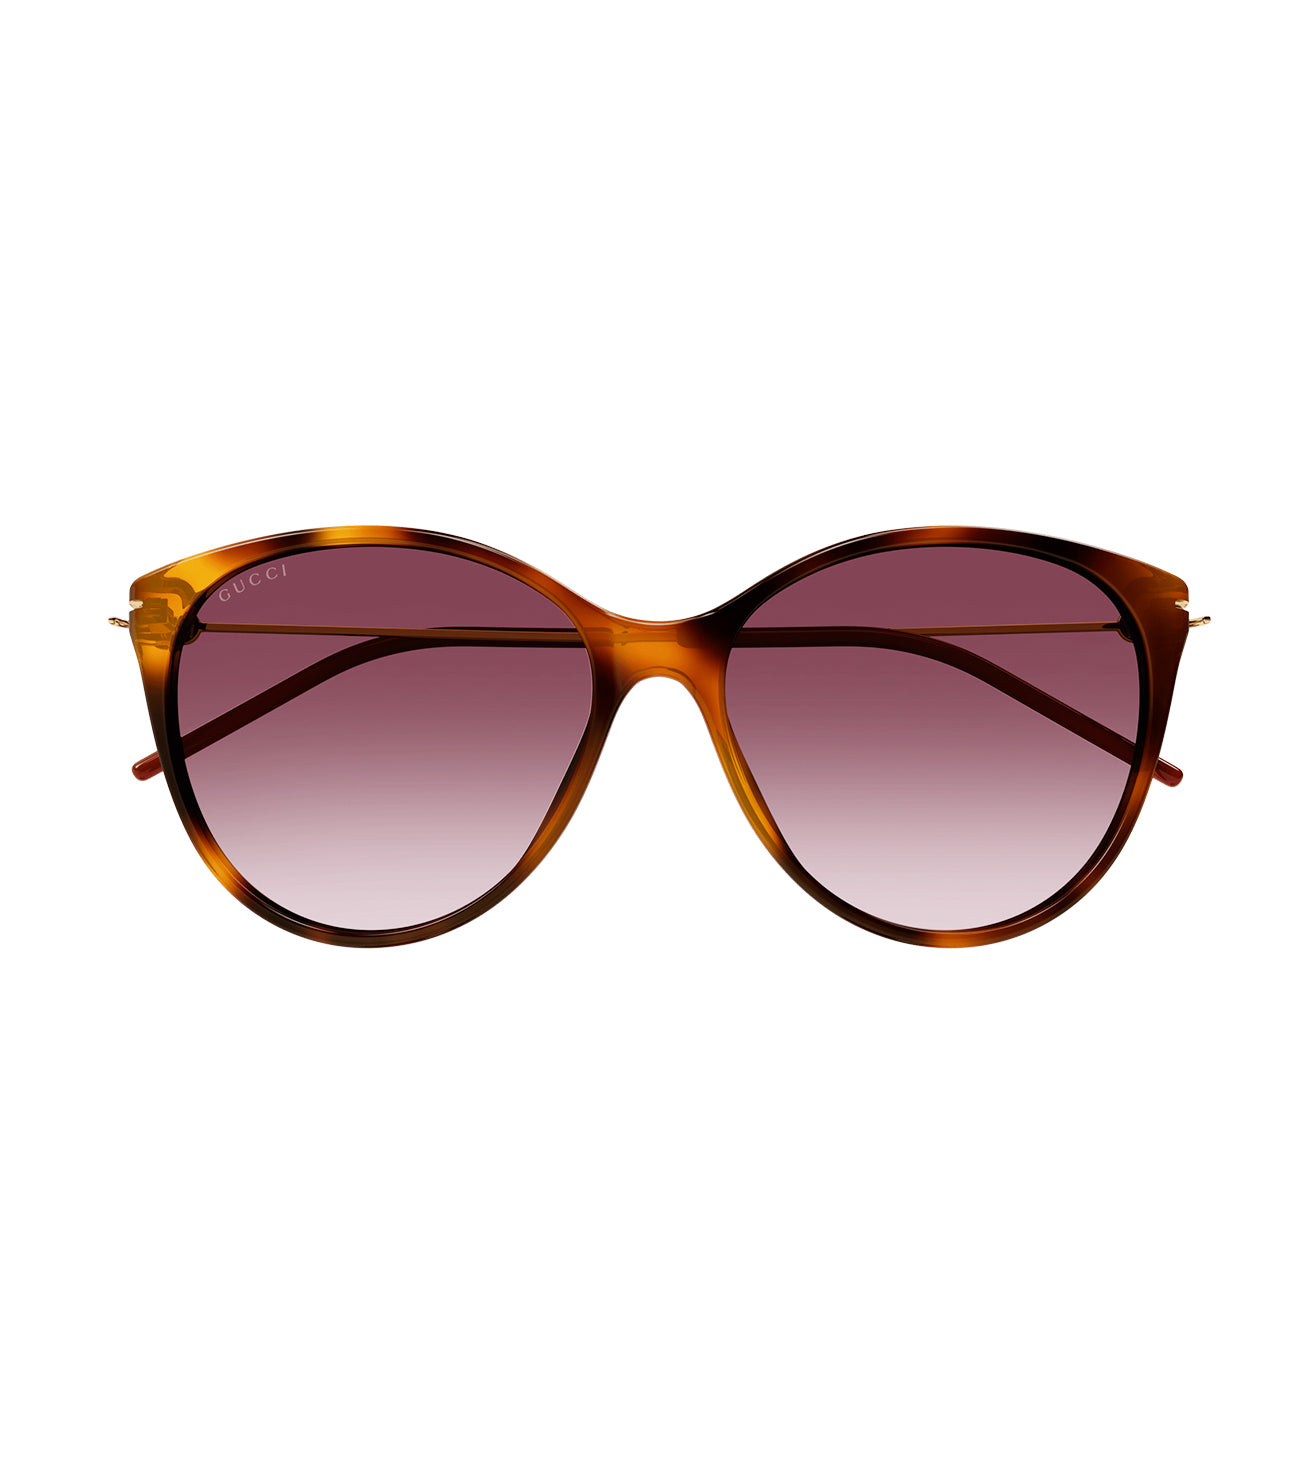 Gucci Women's Red Cat-eye Sunglasses